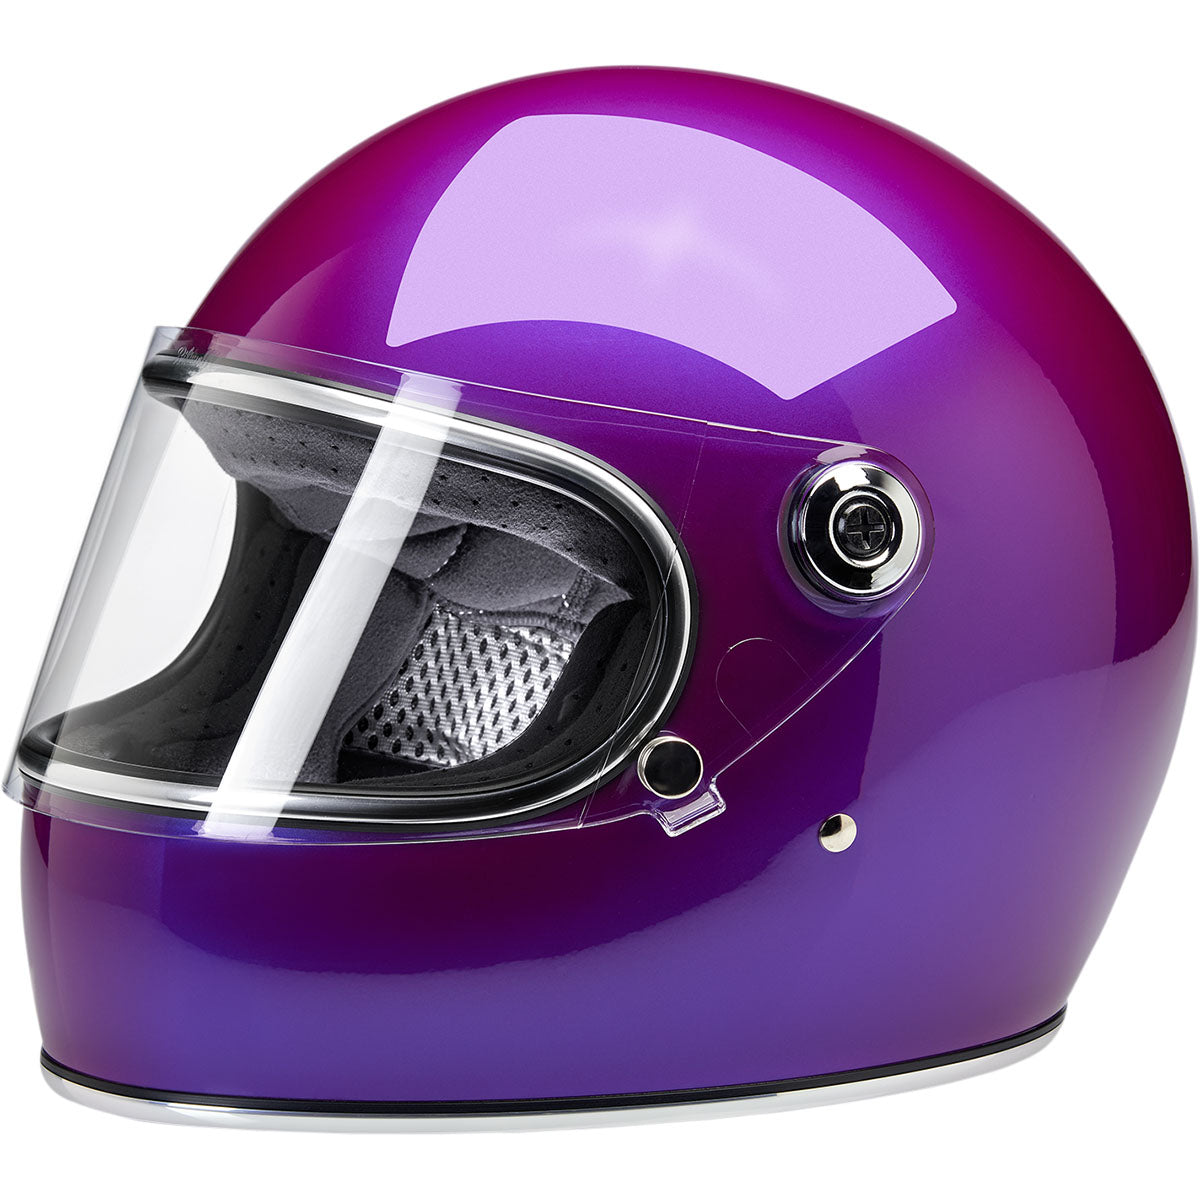 Biltwell Gringo S Helmet CLOSEOUT - Metallic Grape